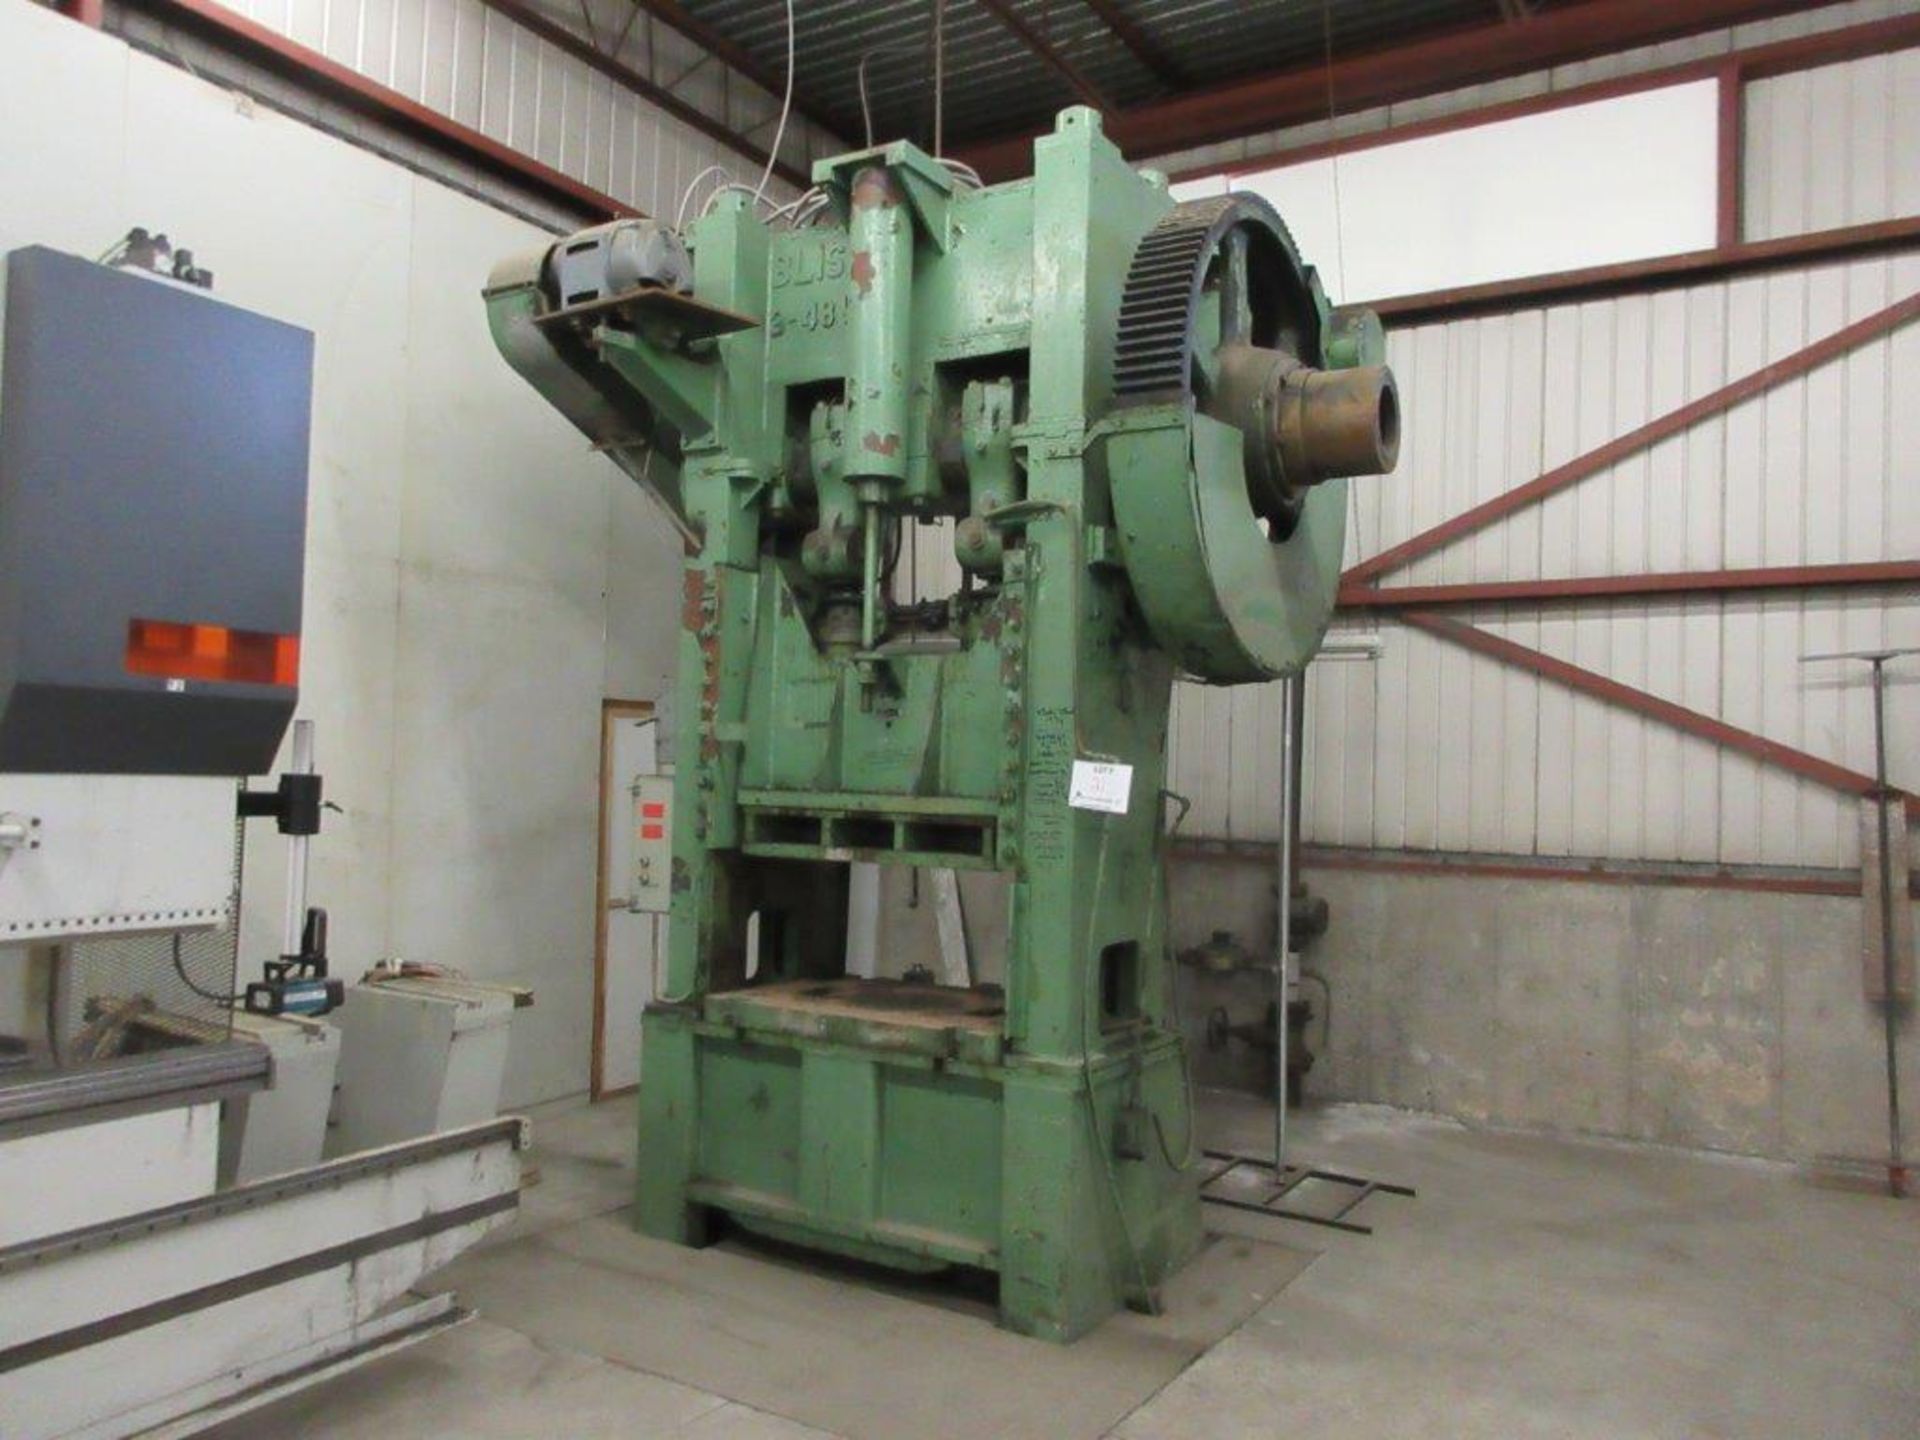 BLISS Mechanical press, 530 Ton